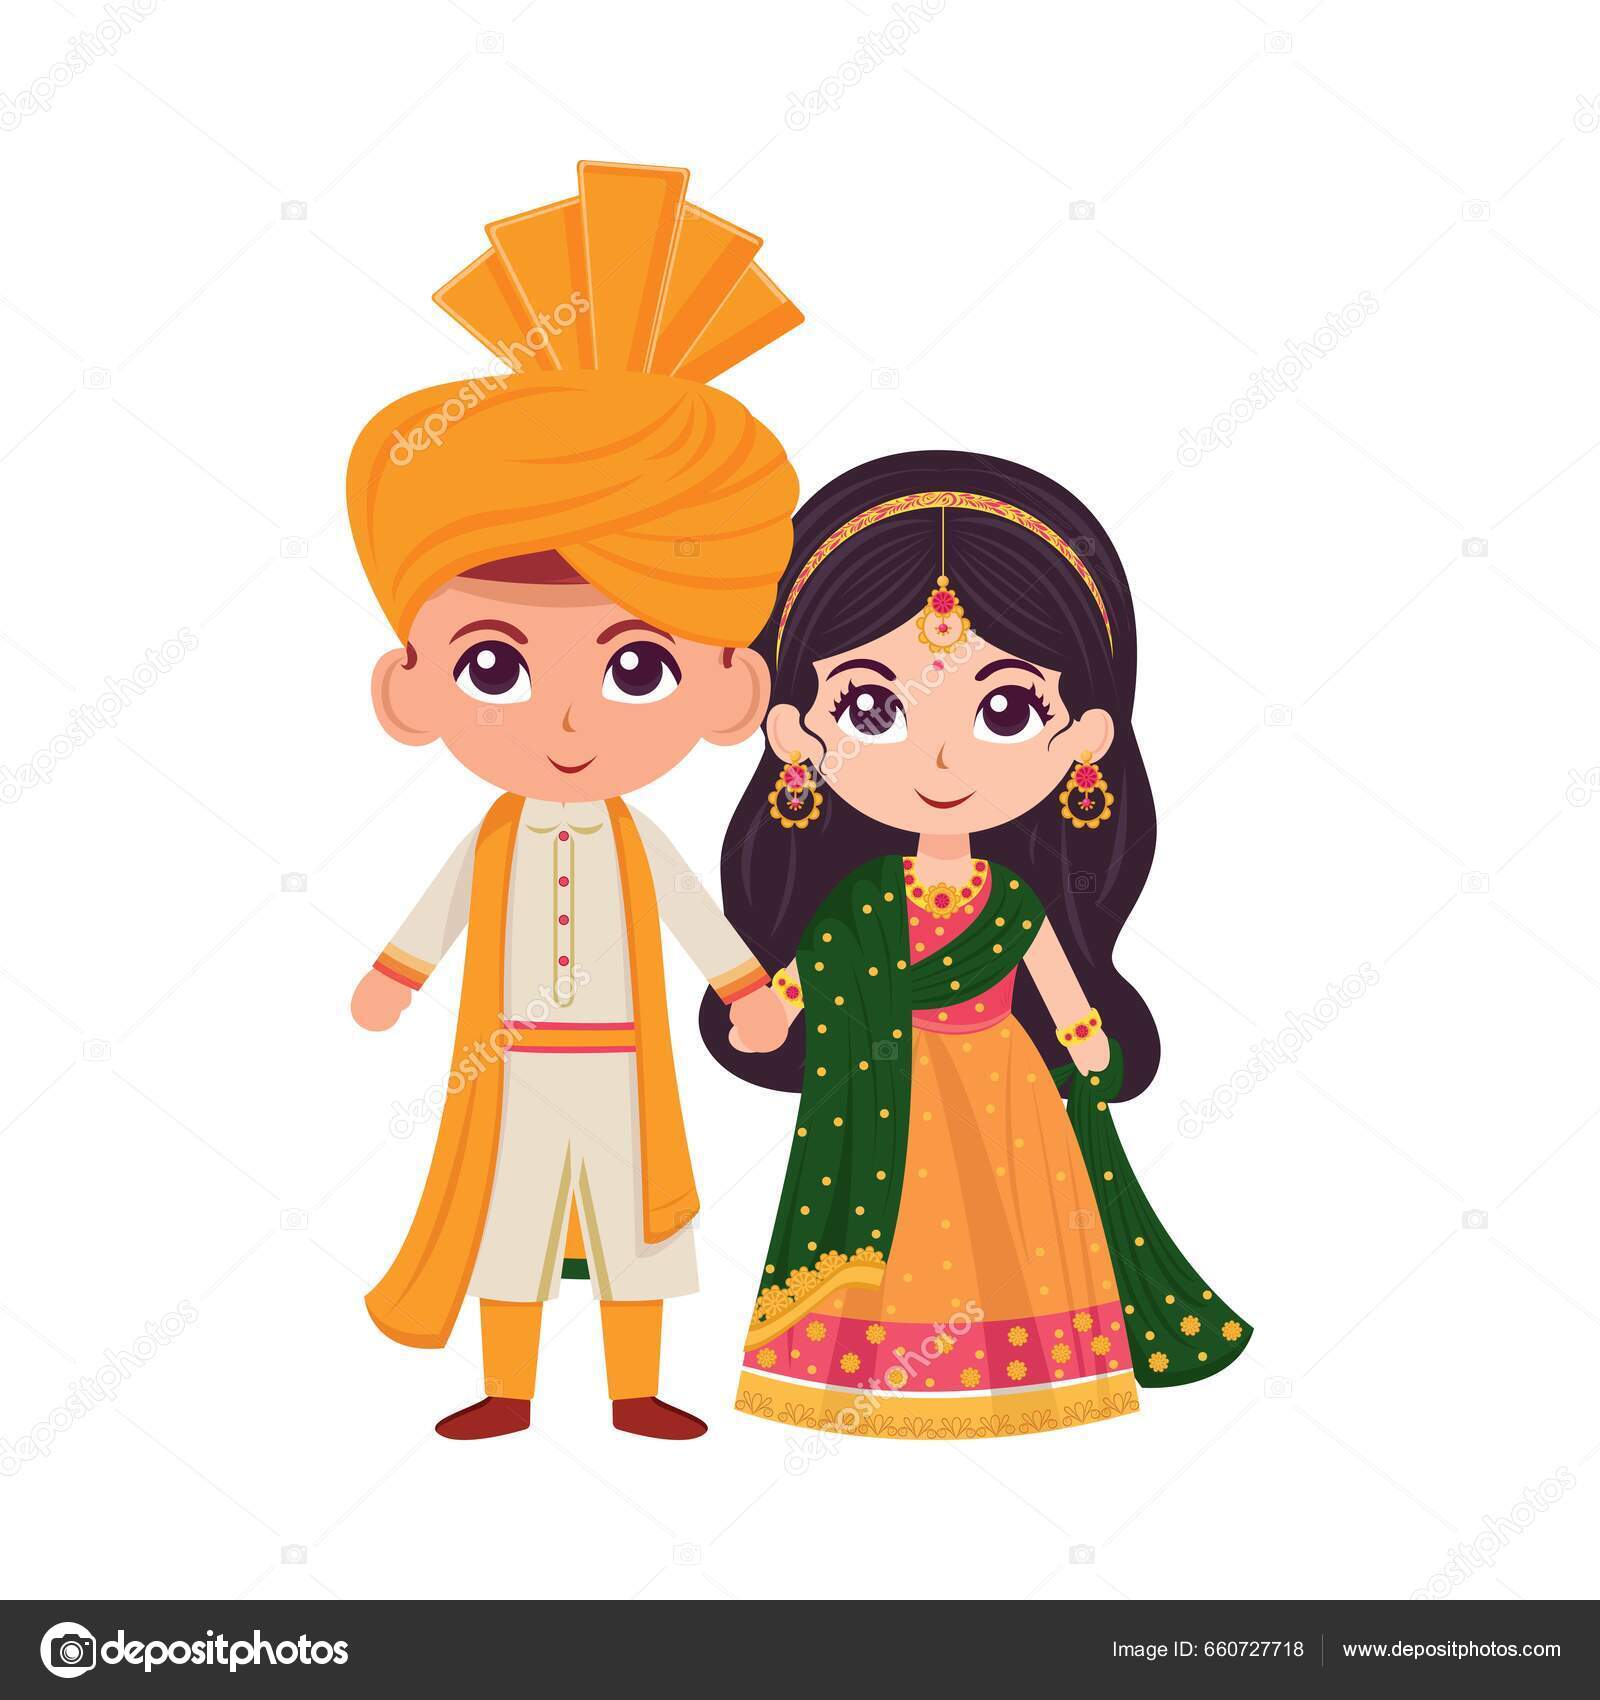 depositphotos 660727718 stock illustration cute indian wedding couple character